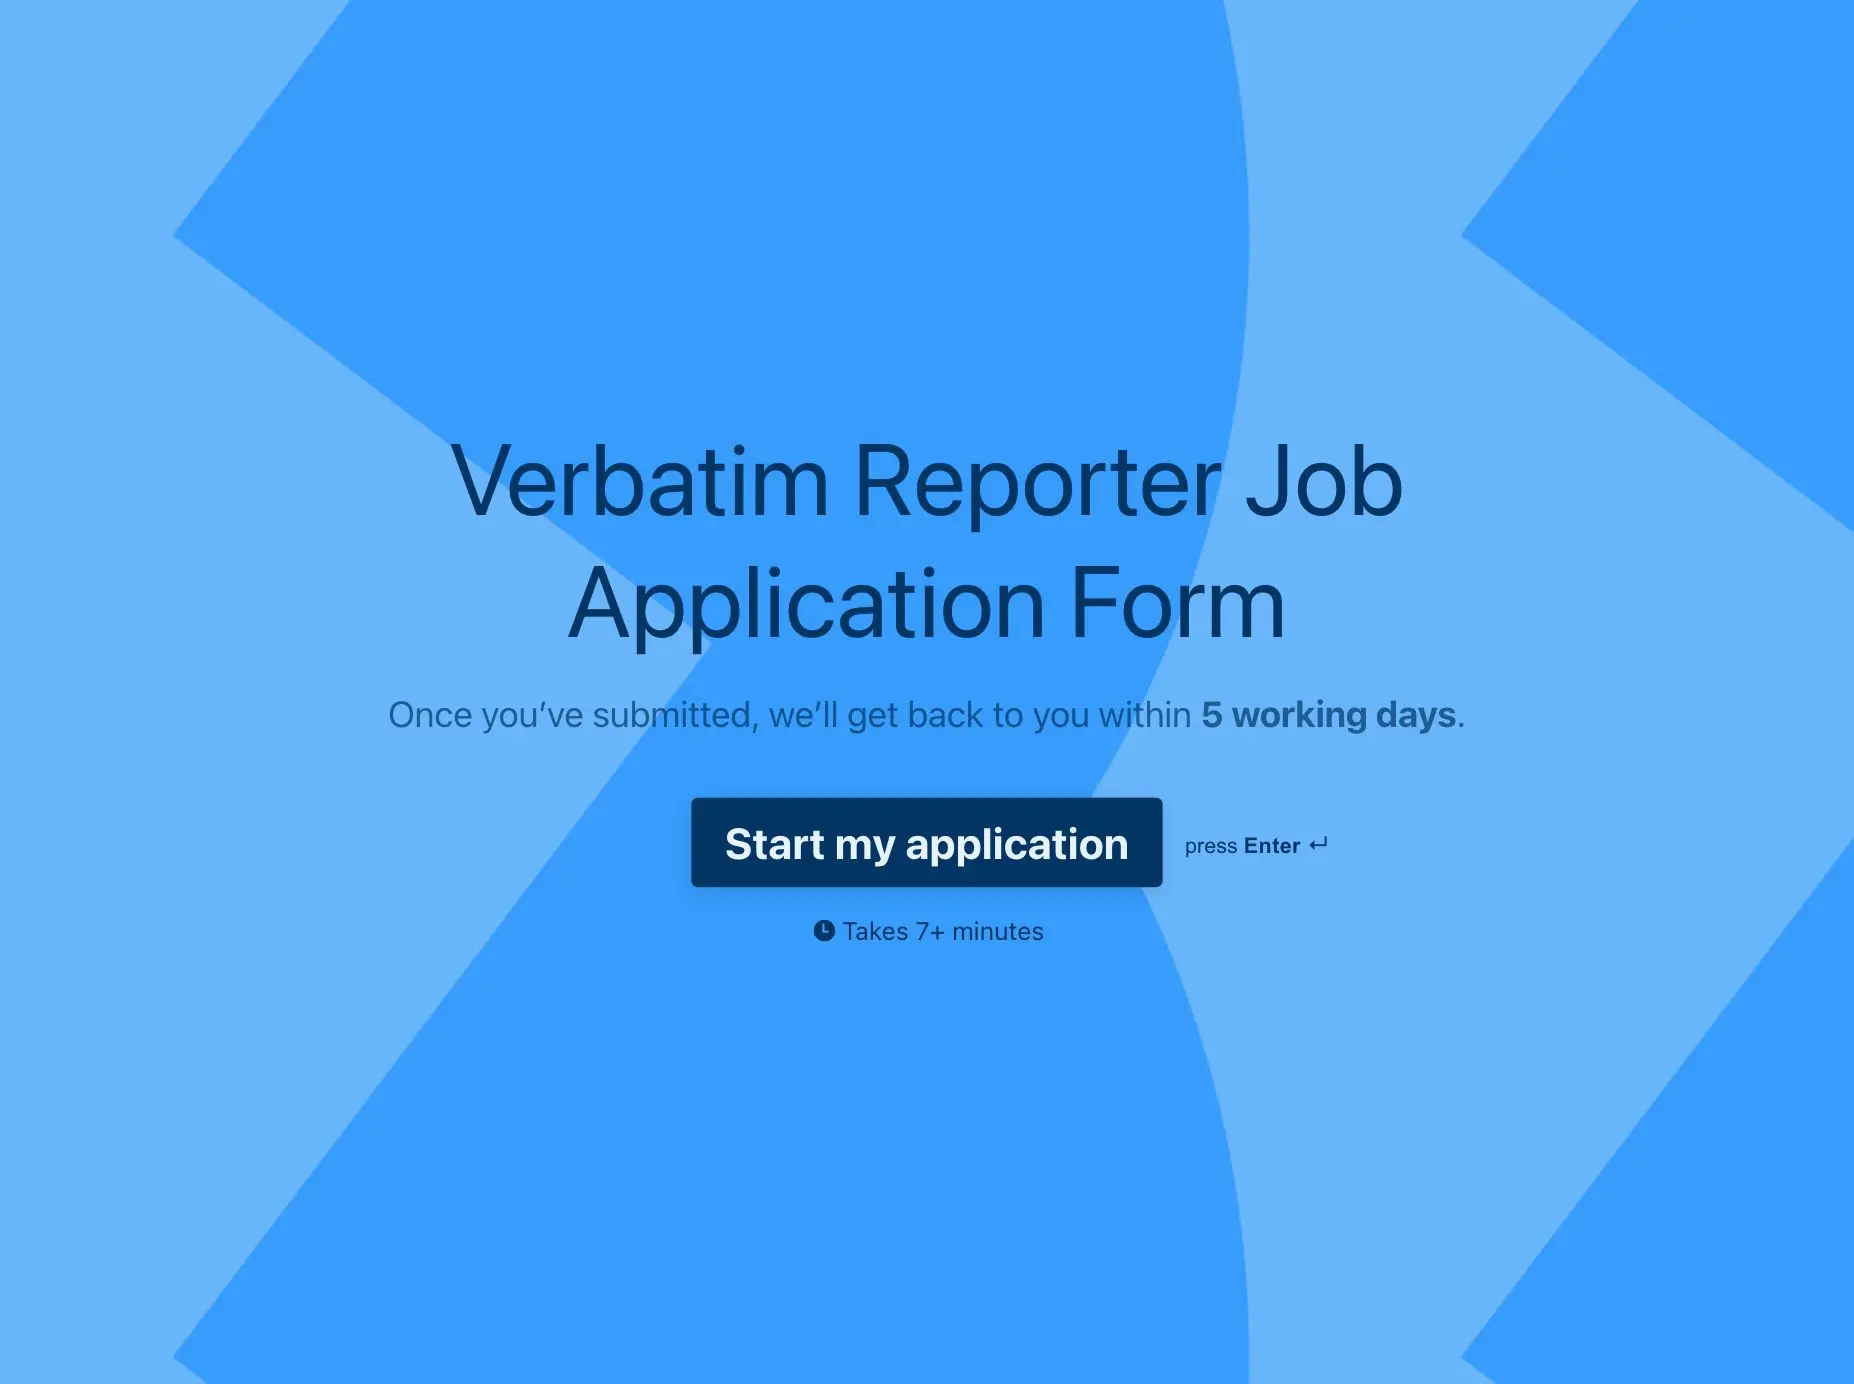 Verbatim Reporter Job Application Form Template Hero